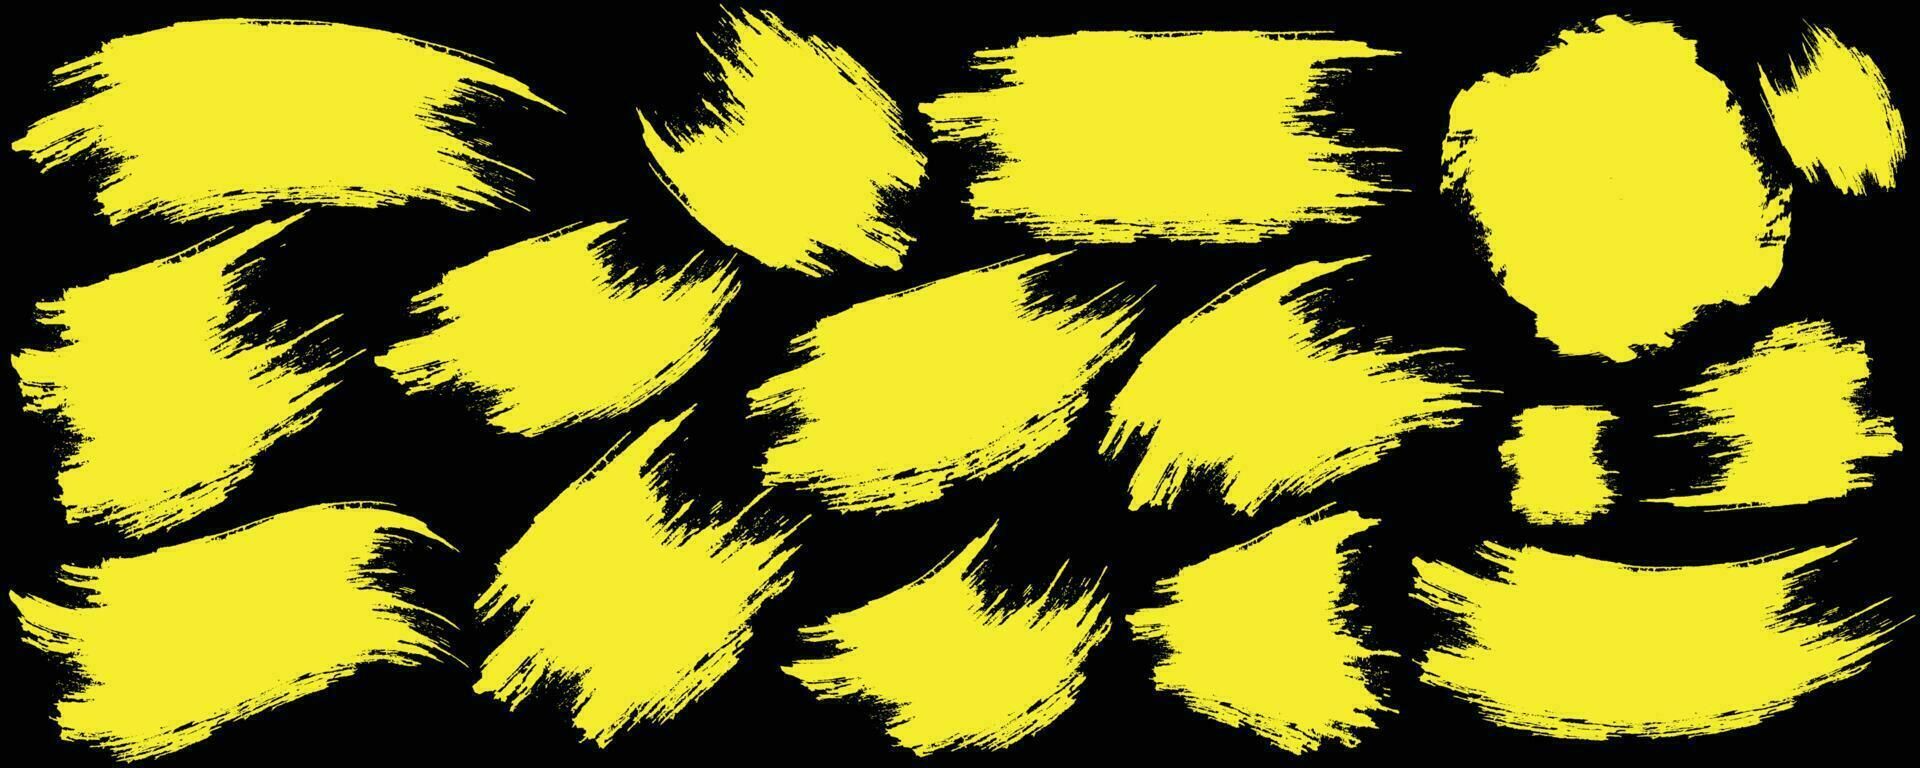 quadro de pincel respingo moderno conjunto de fundo de cor amarela vetor